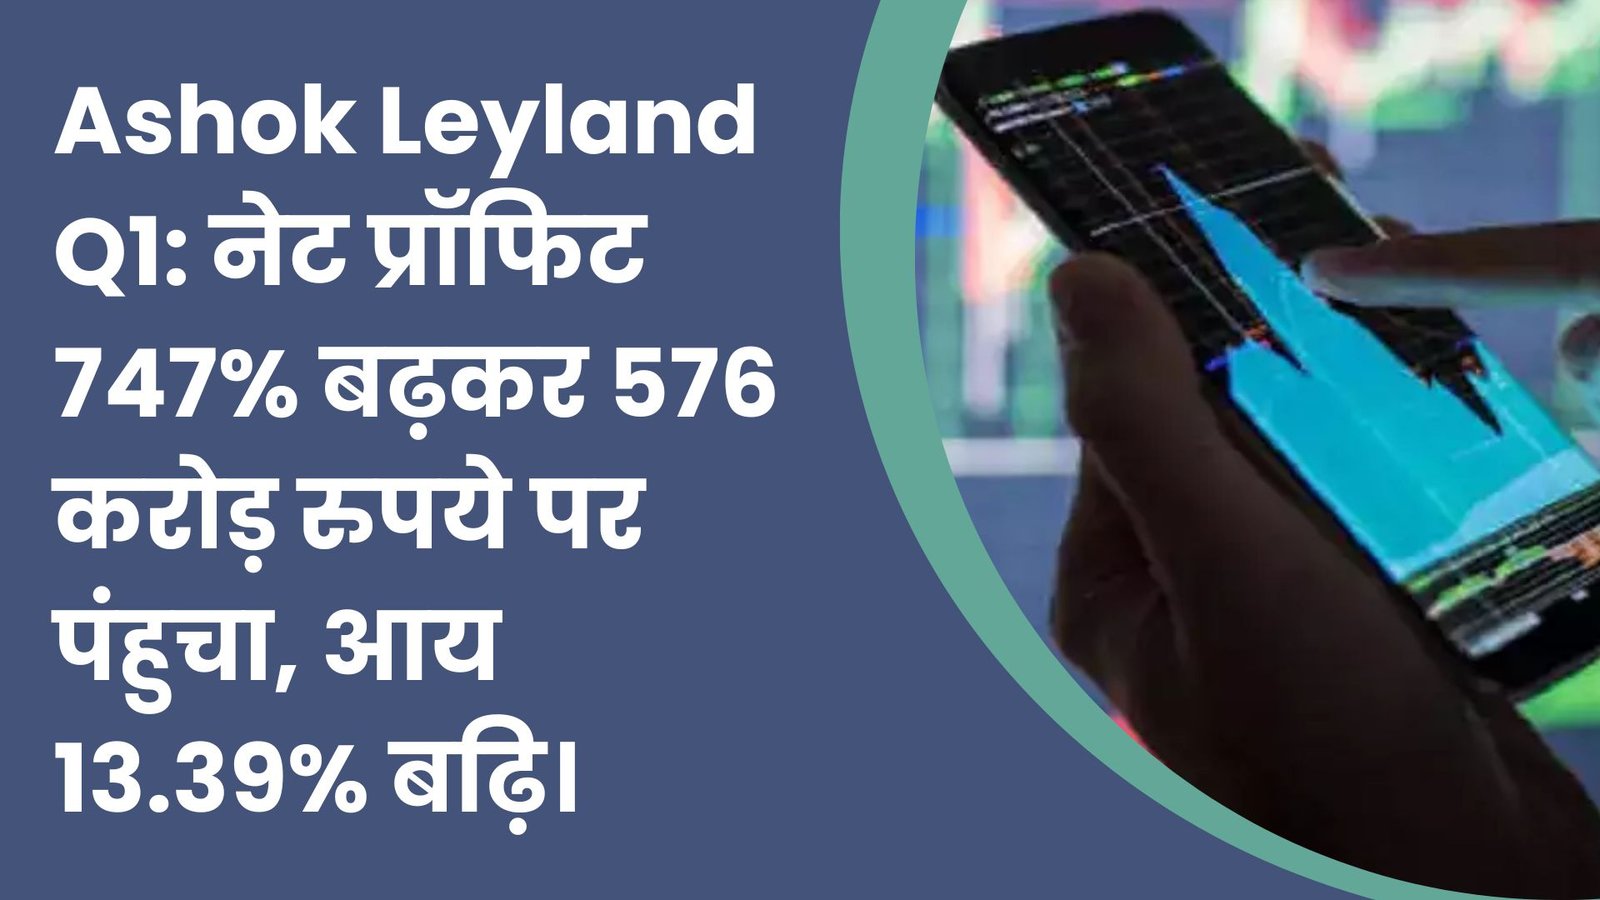 Ashok Leyland Q1: नेट प्रॉफिट 747% बढ़कर 576 करोड़ रुपये पर पंहुचा, आय 13.39% बढ़ि।